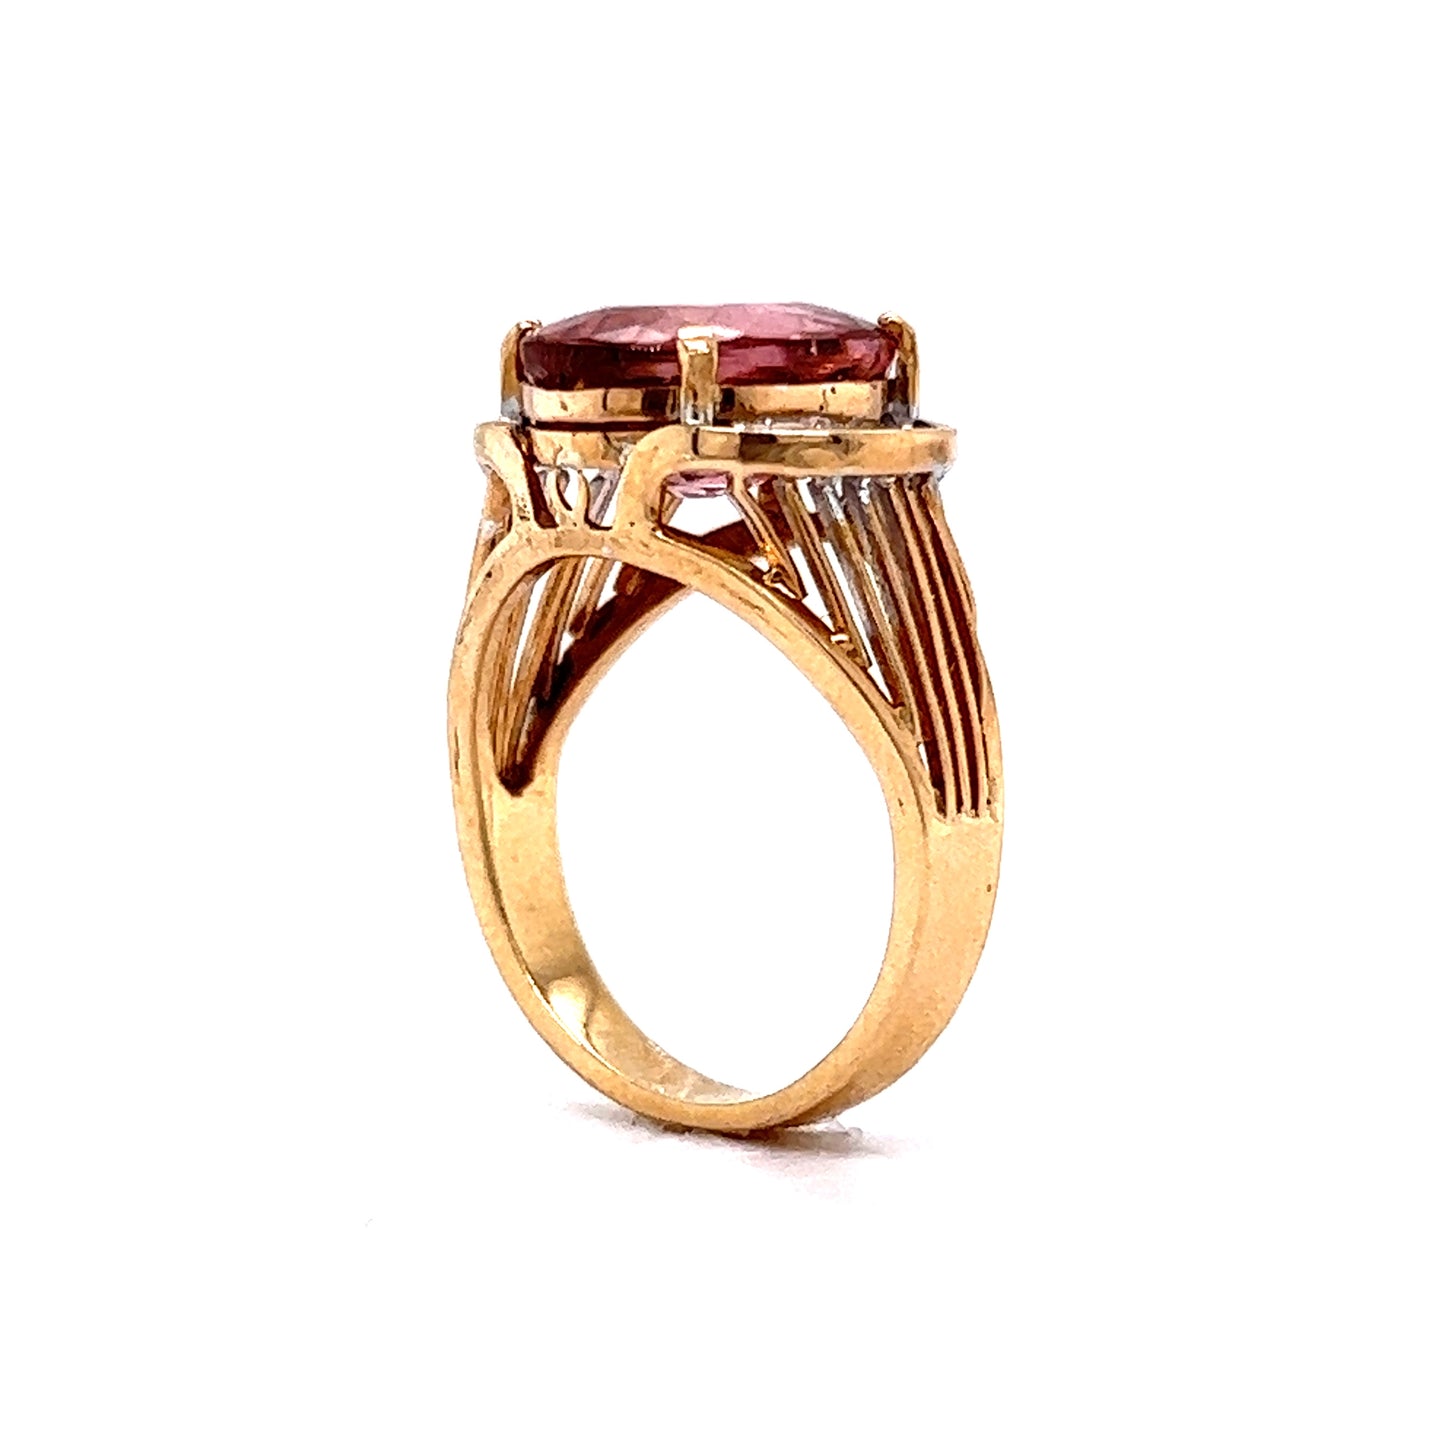 Vintage Pink Tourmaline & Diamond Cocktail Ring in 14k Yellow Gold